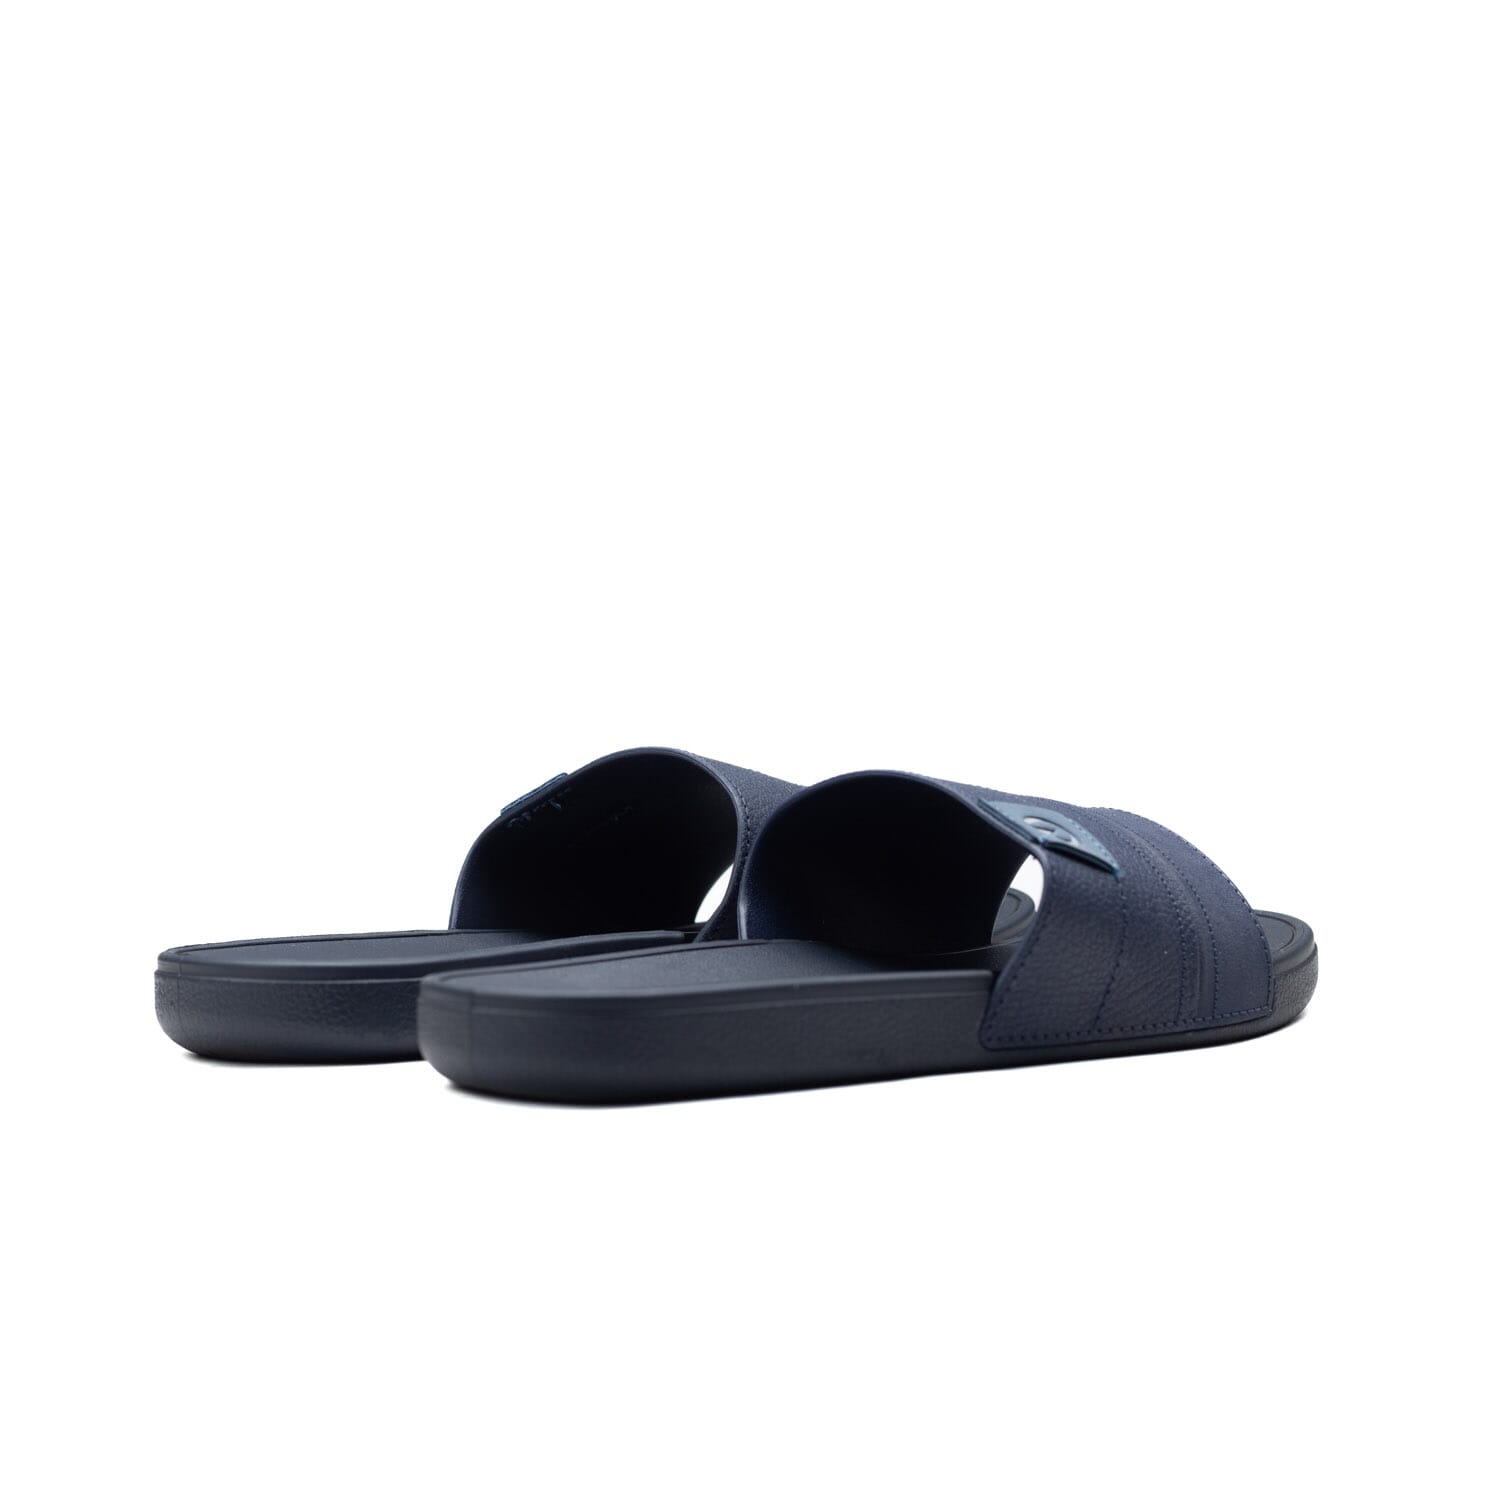 CARATGO – DAKAR SLIDE -NAVY/BLUE – Perocili Shoes